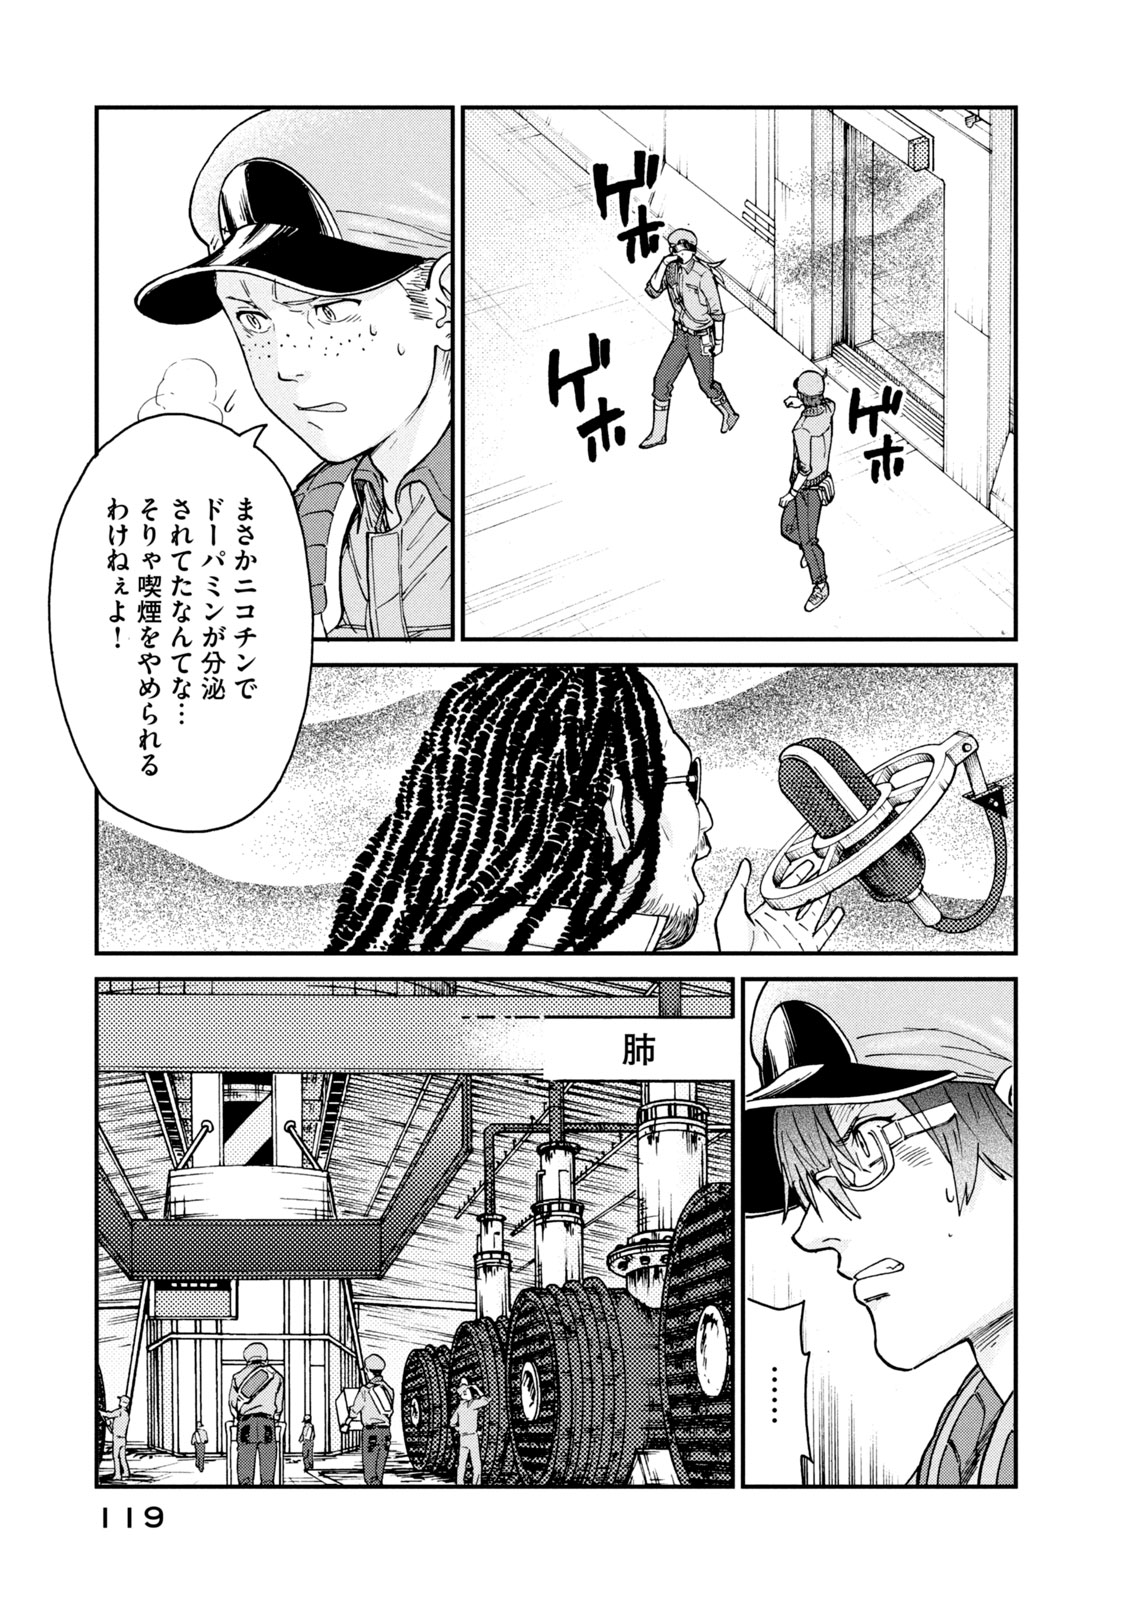 Hataraku Saibou BLACK - Chapter 35 - Page 27